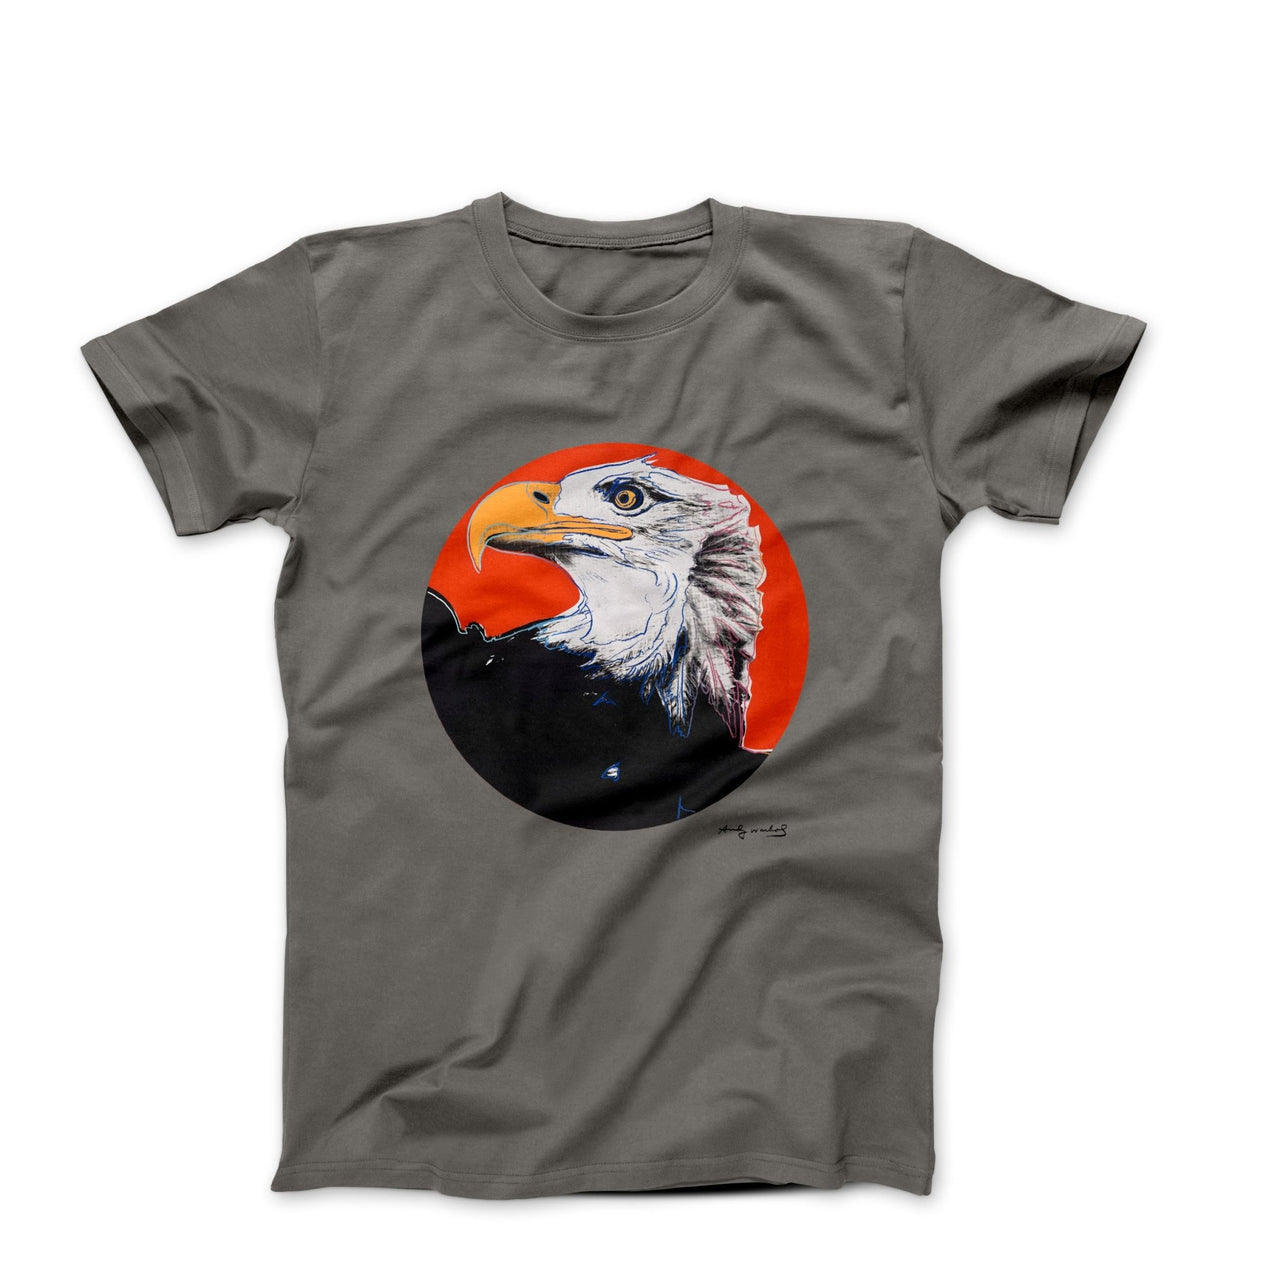 Andy Warhol Bald Eagle I (1983) Artwork T-shirt - Clothing - Harvey Ltd